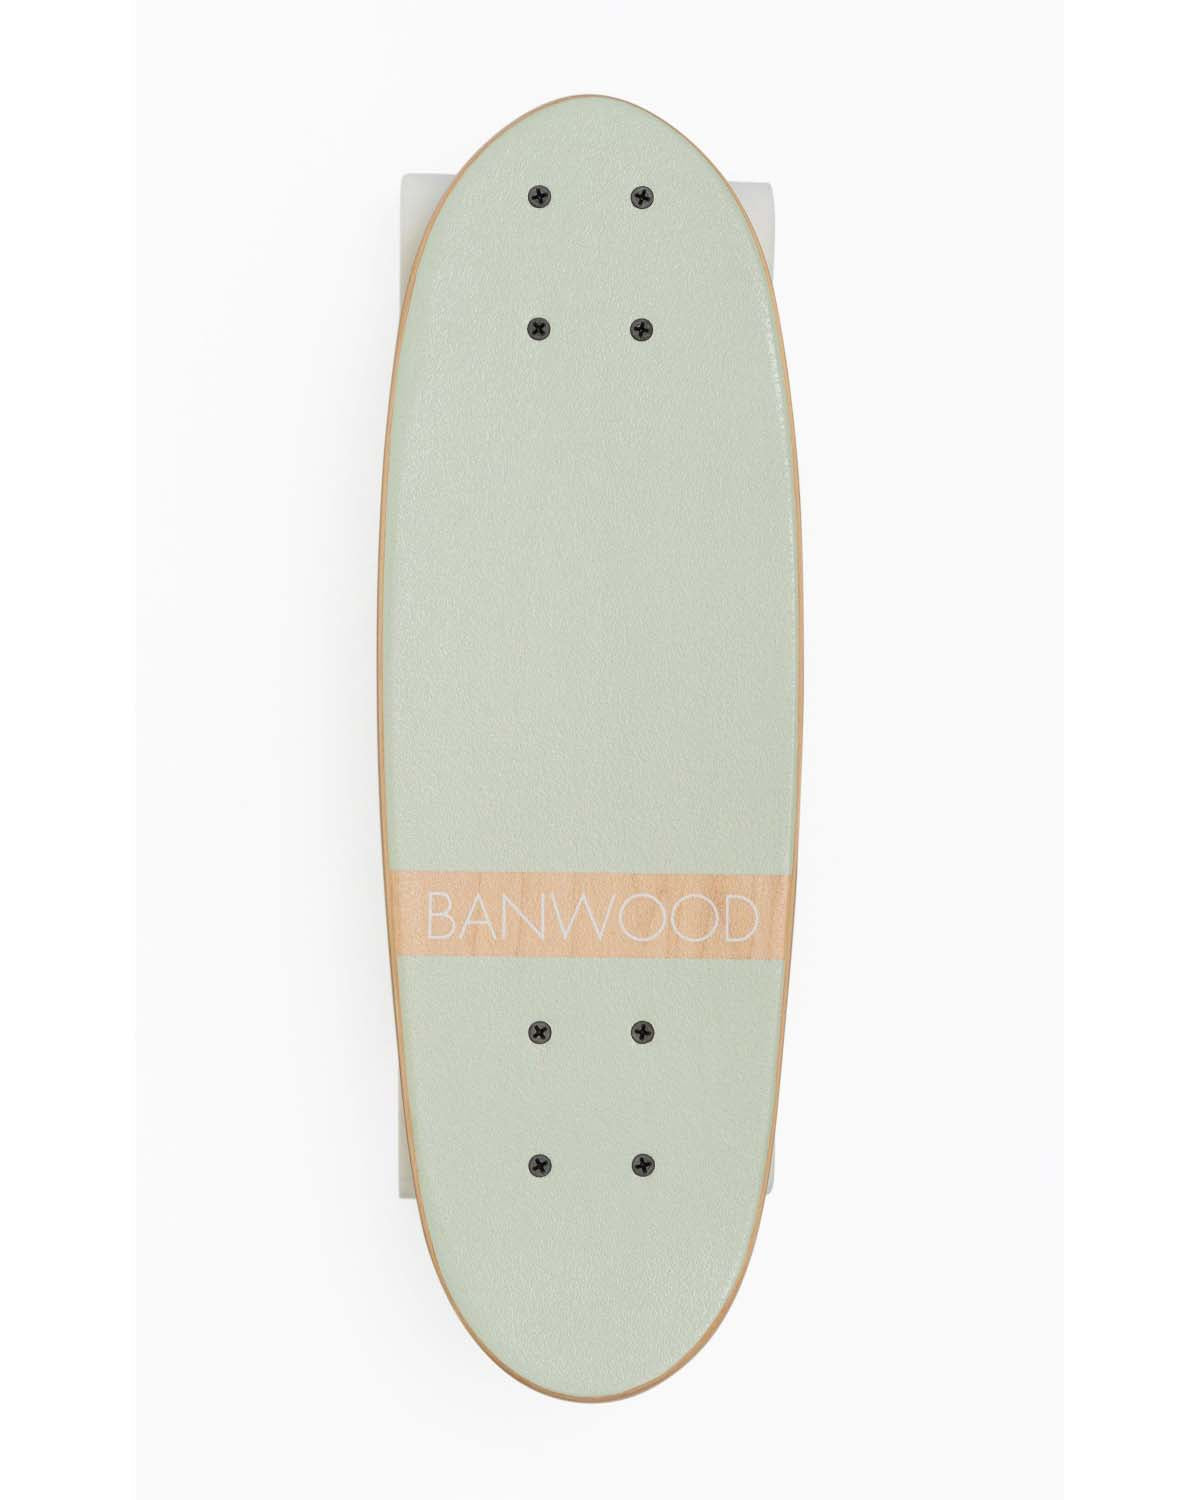 Little banwood play banwood skateboard in mint